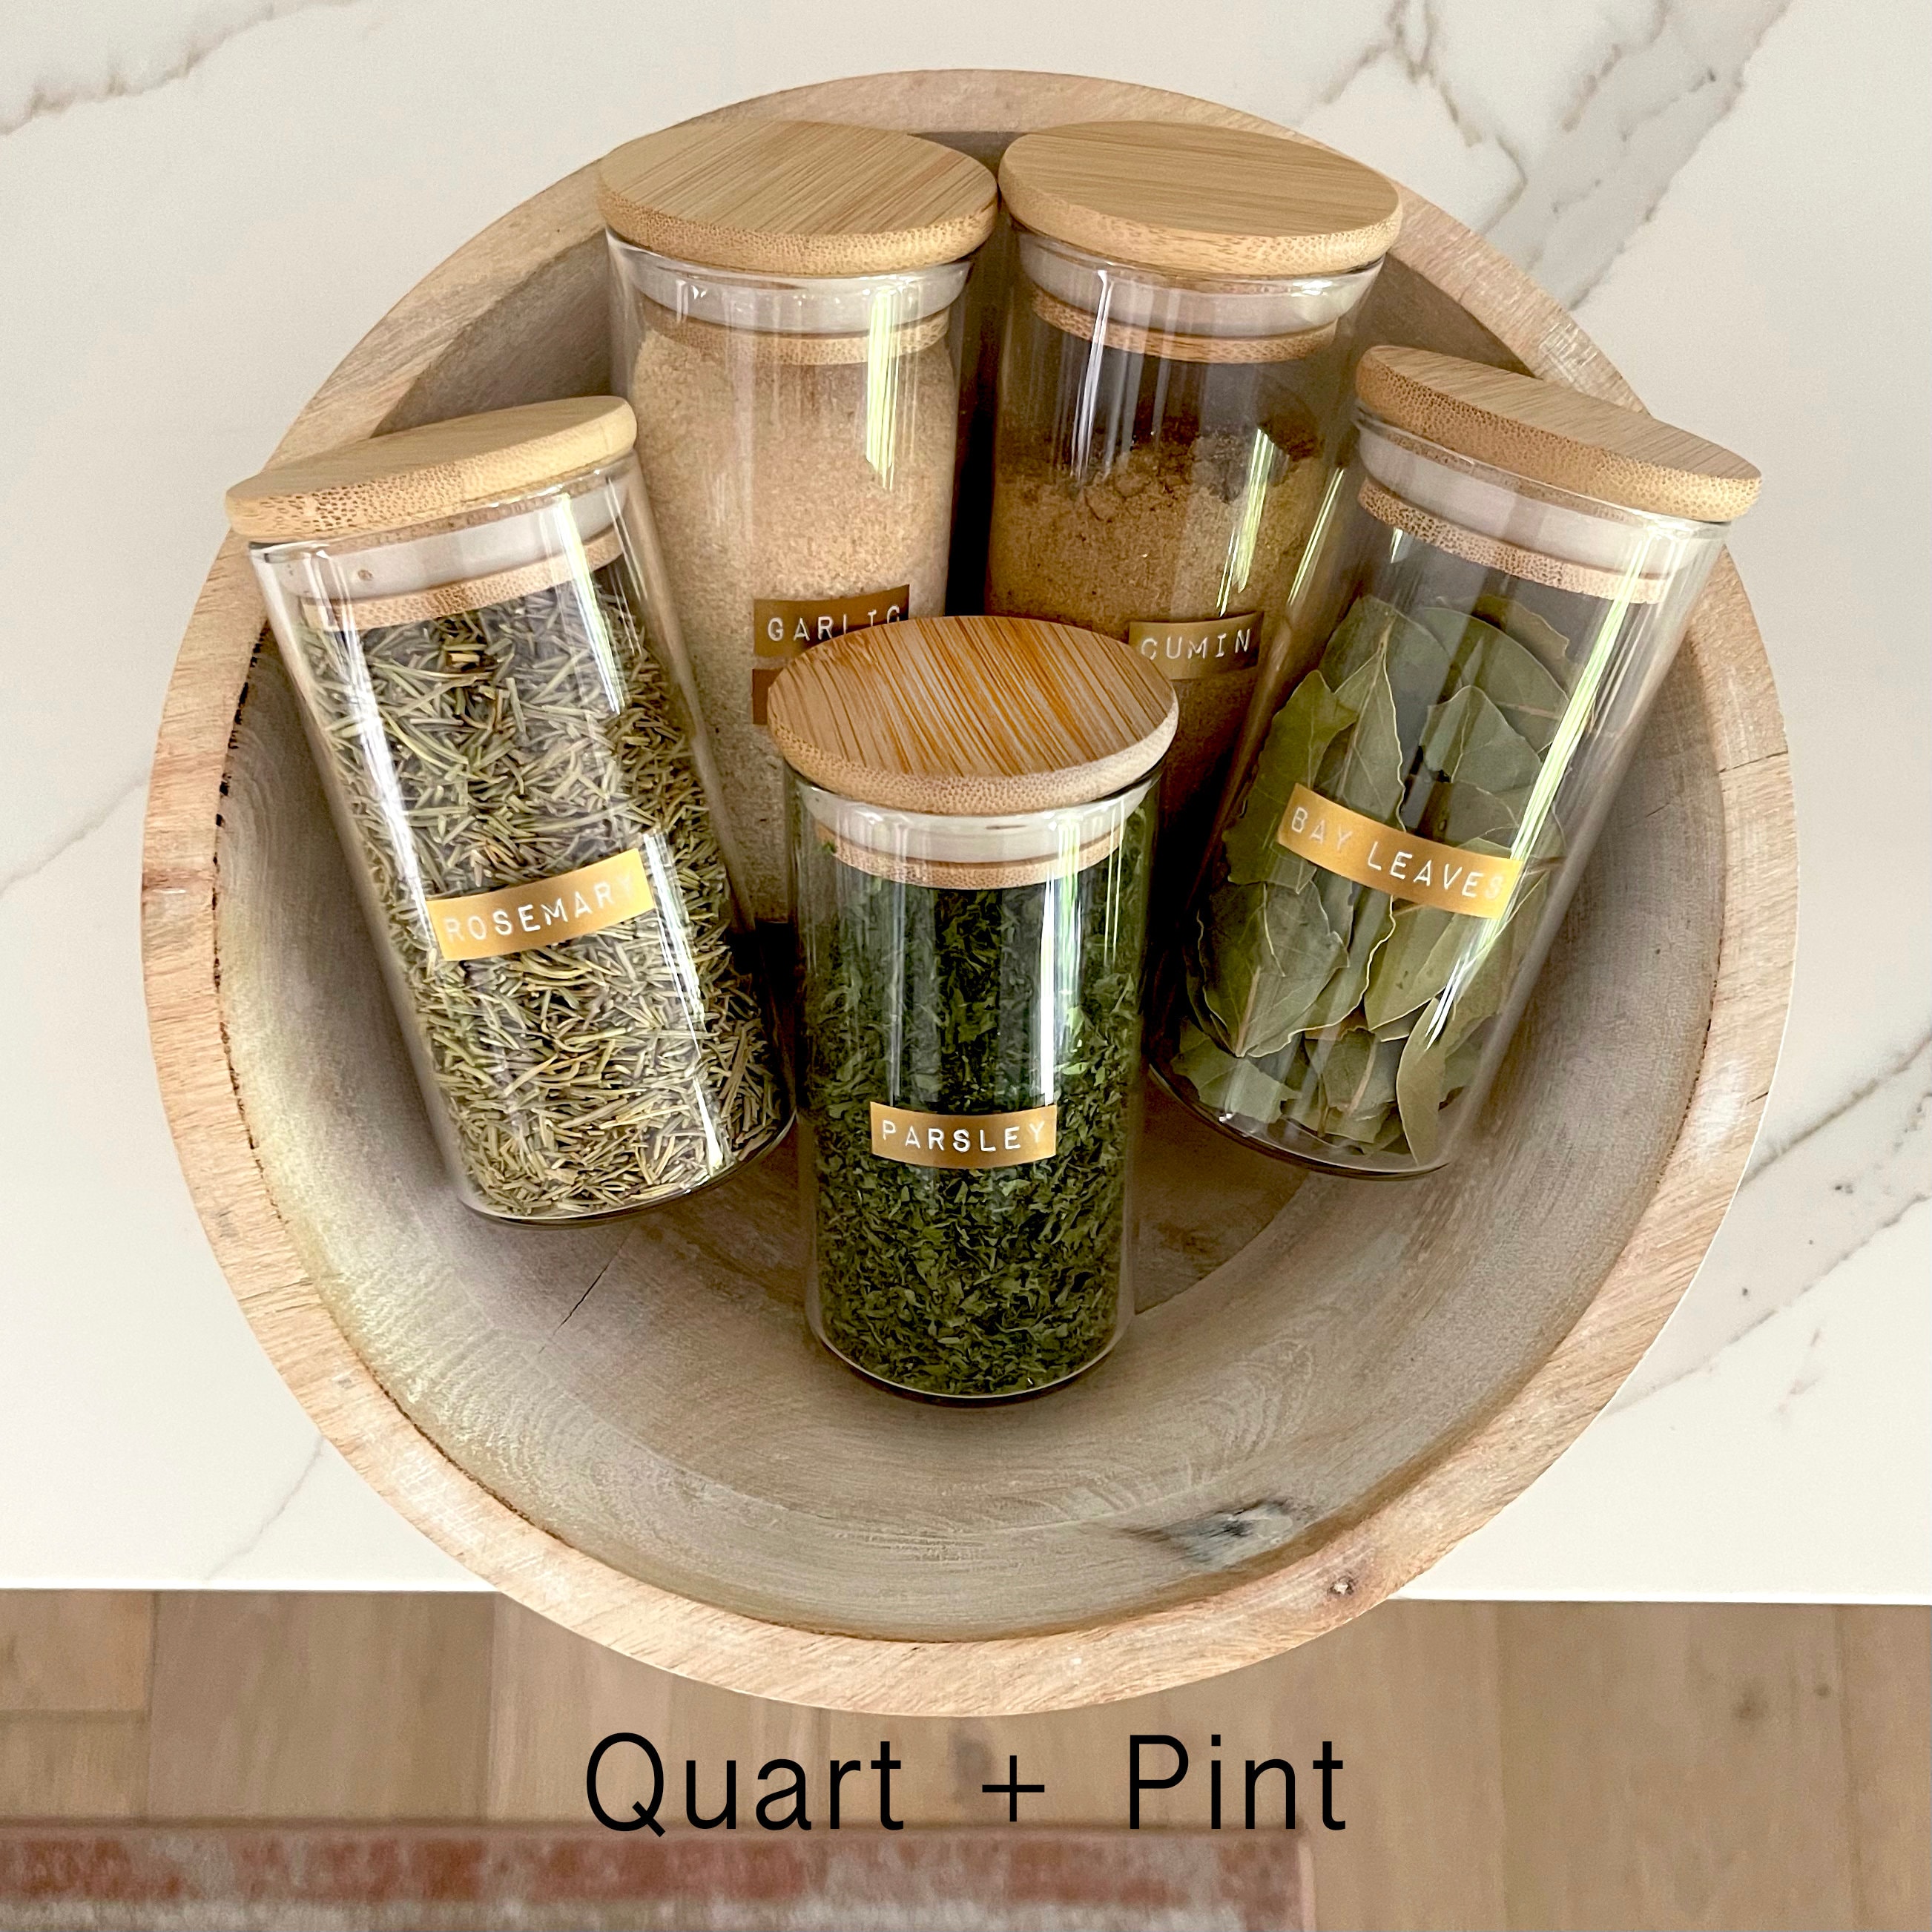 Quart + Pint 160 Spice Jar Labels: Minimalist Matte Black Sticker White  Text. Waterproof Stickers. Organization for Jars Bottles Containers Bins.